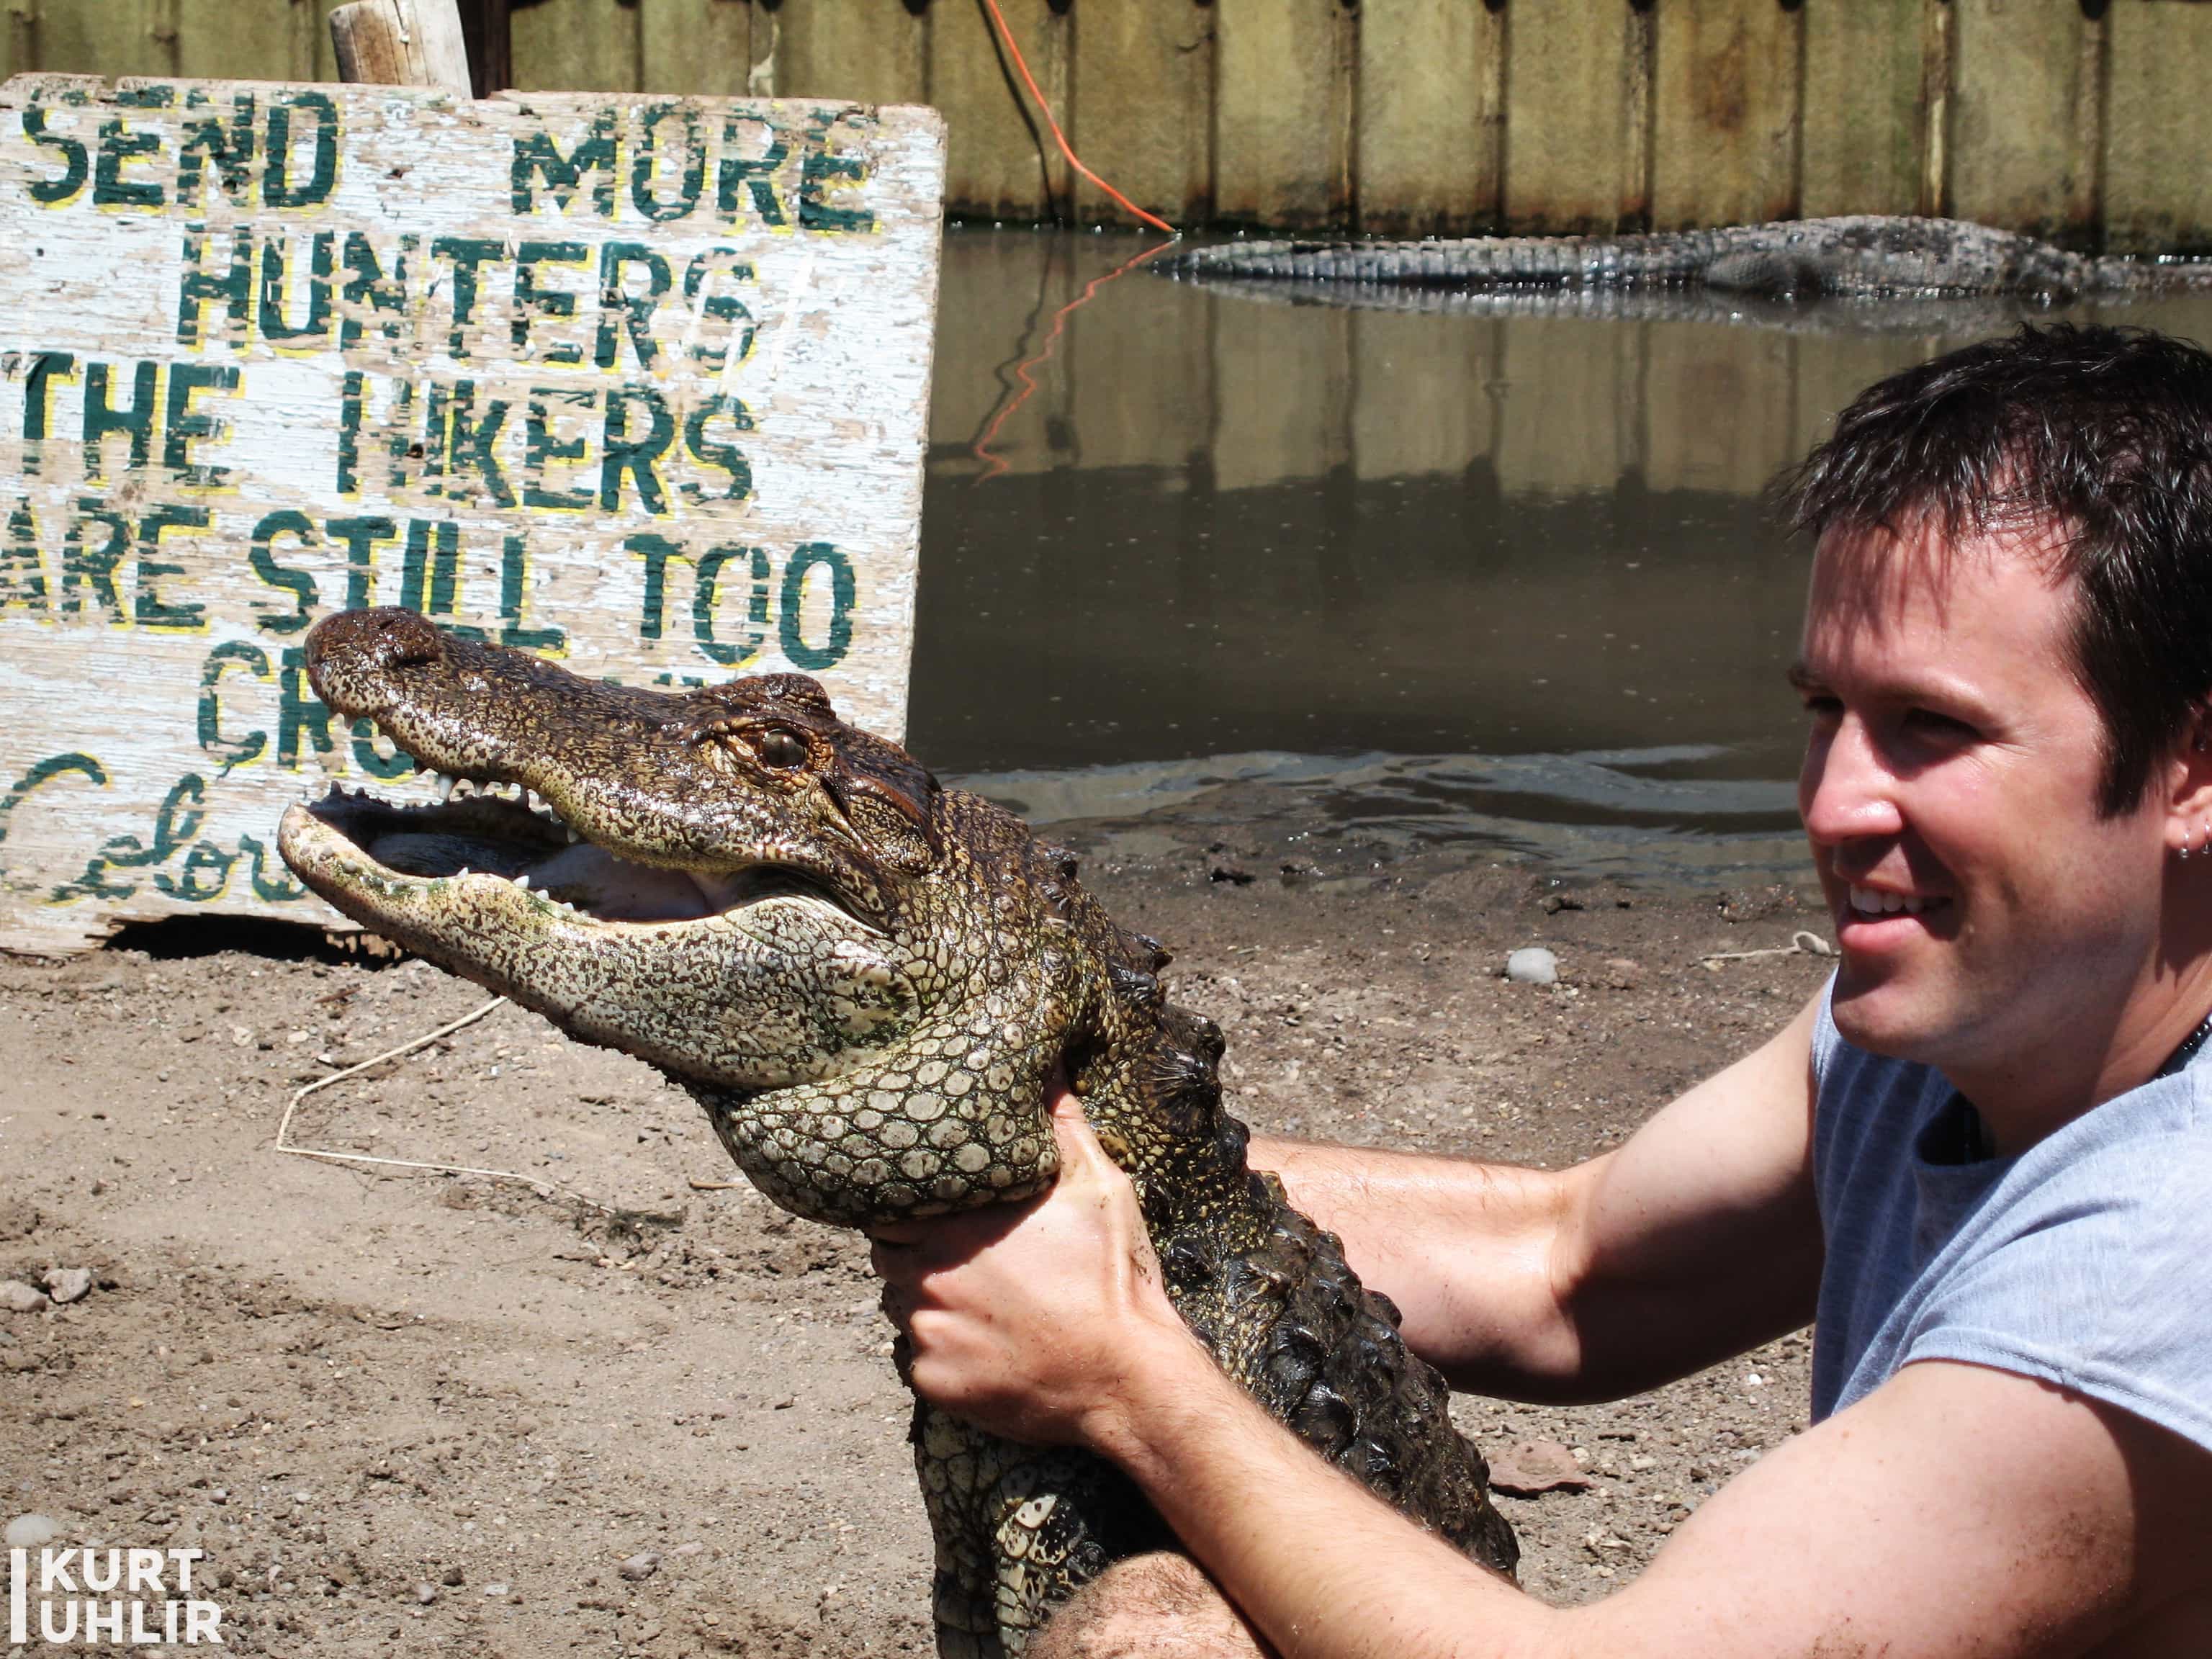 Kurt Uhlir handling a mid-sized alligator